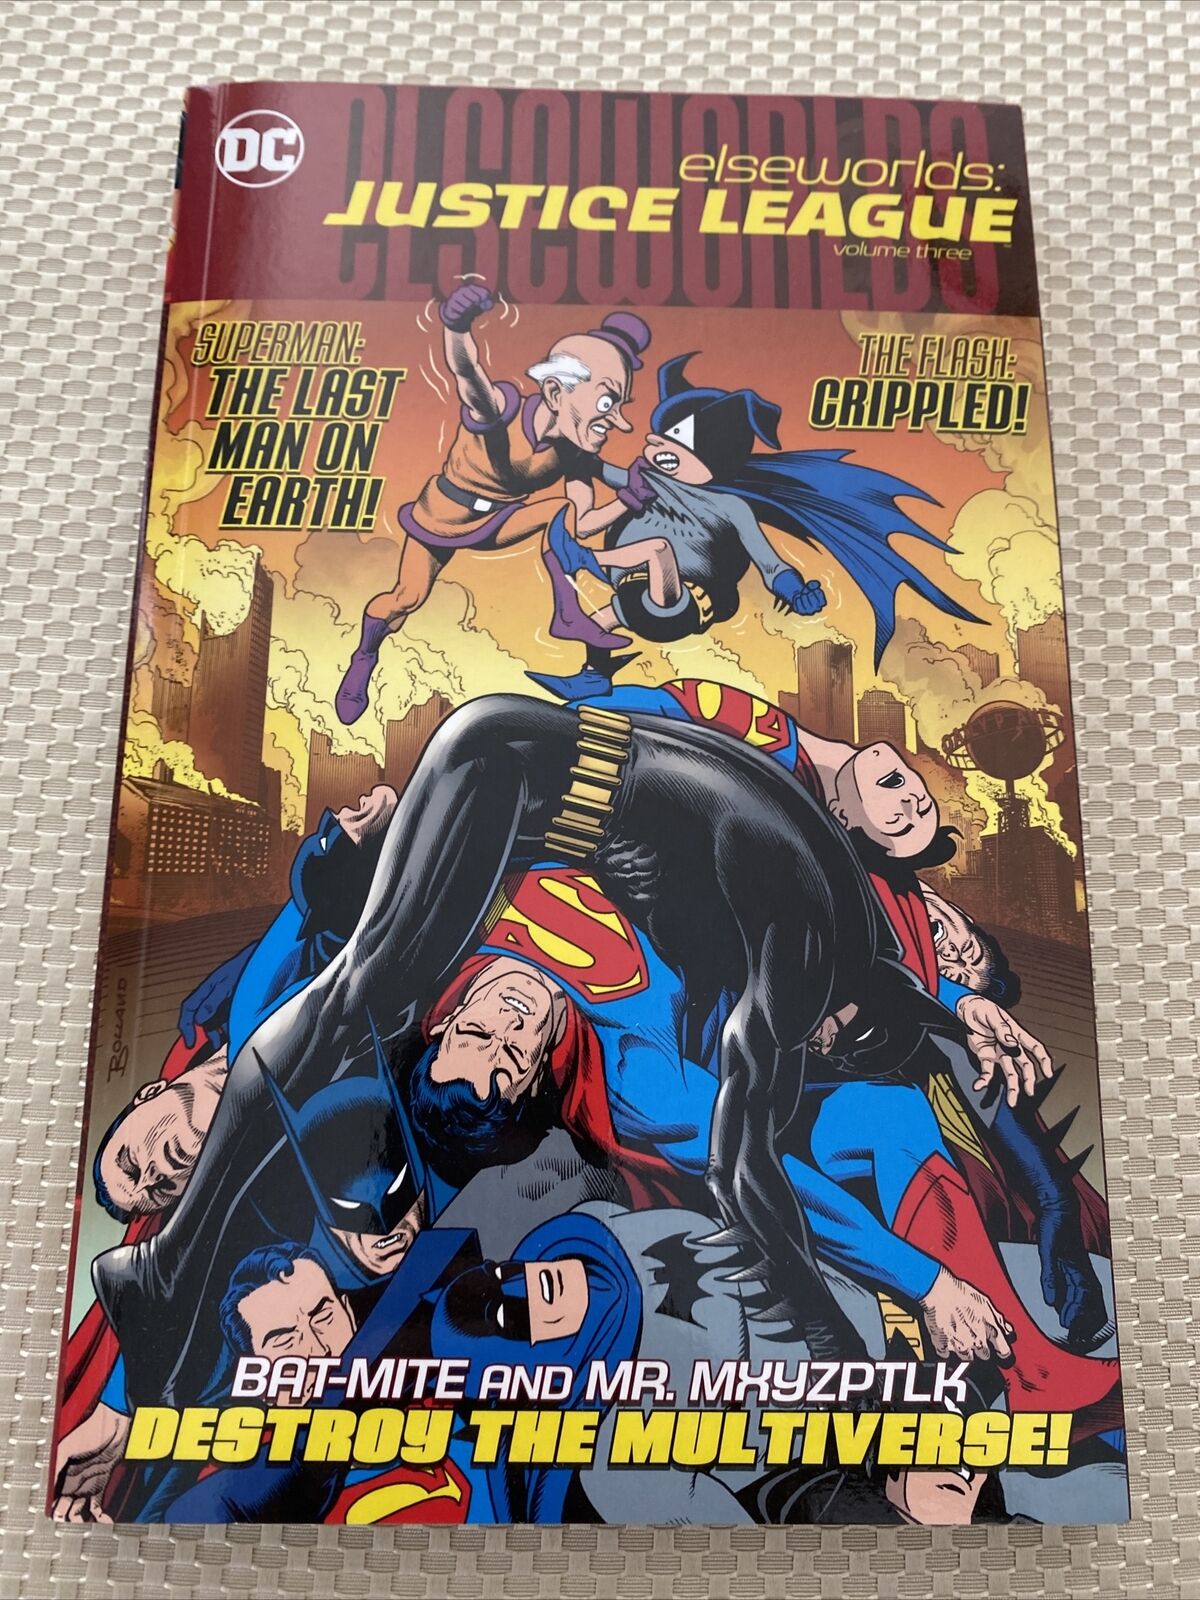 ELSEWORLDS JUSTICE LEAGUE VOL 3, TPB, DC COMIC,UNREAD SUPERMAN BATMAN, BRAND NEW